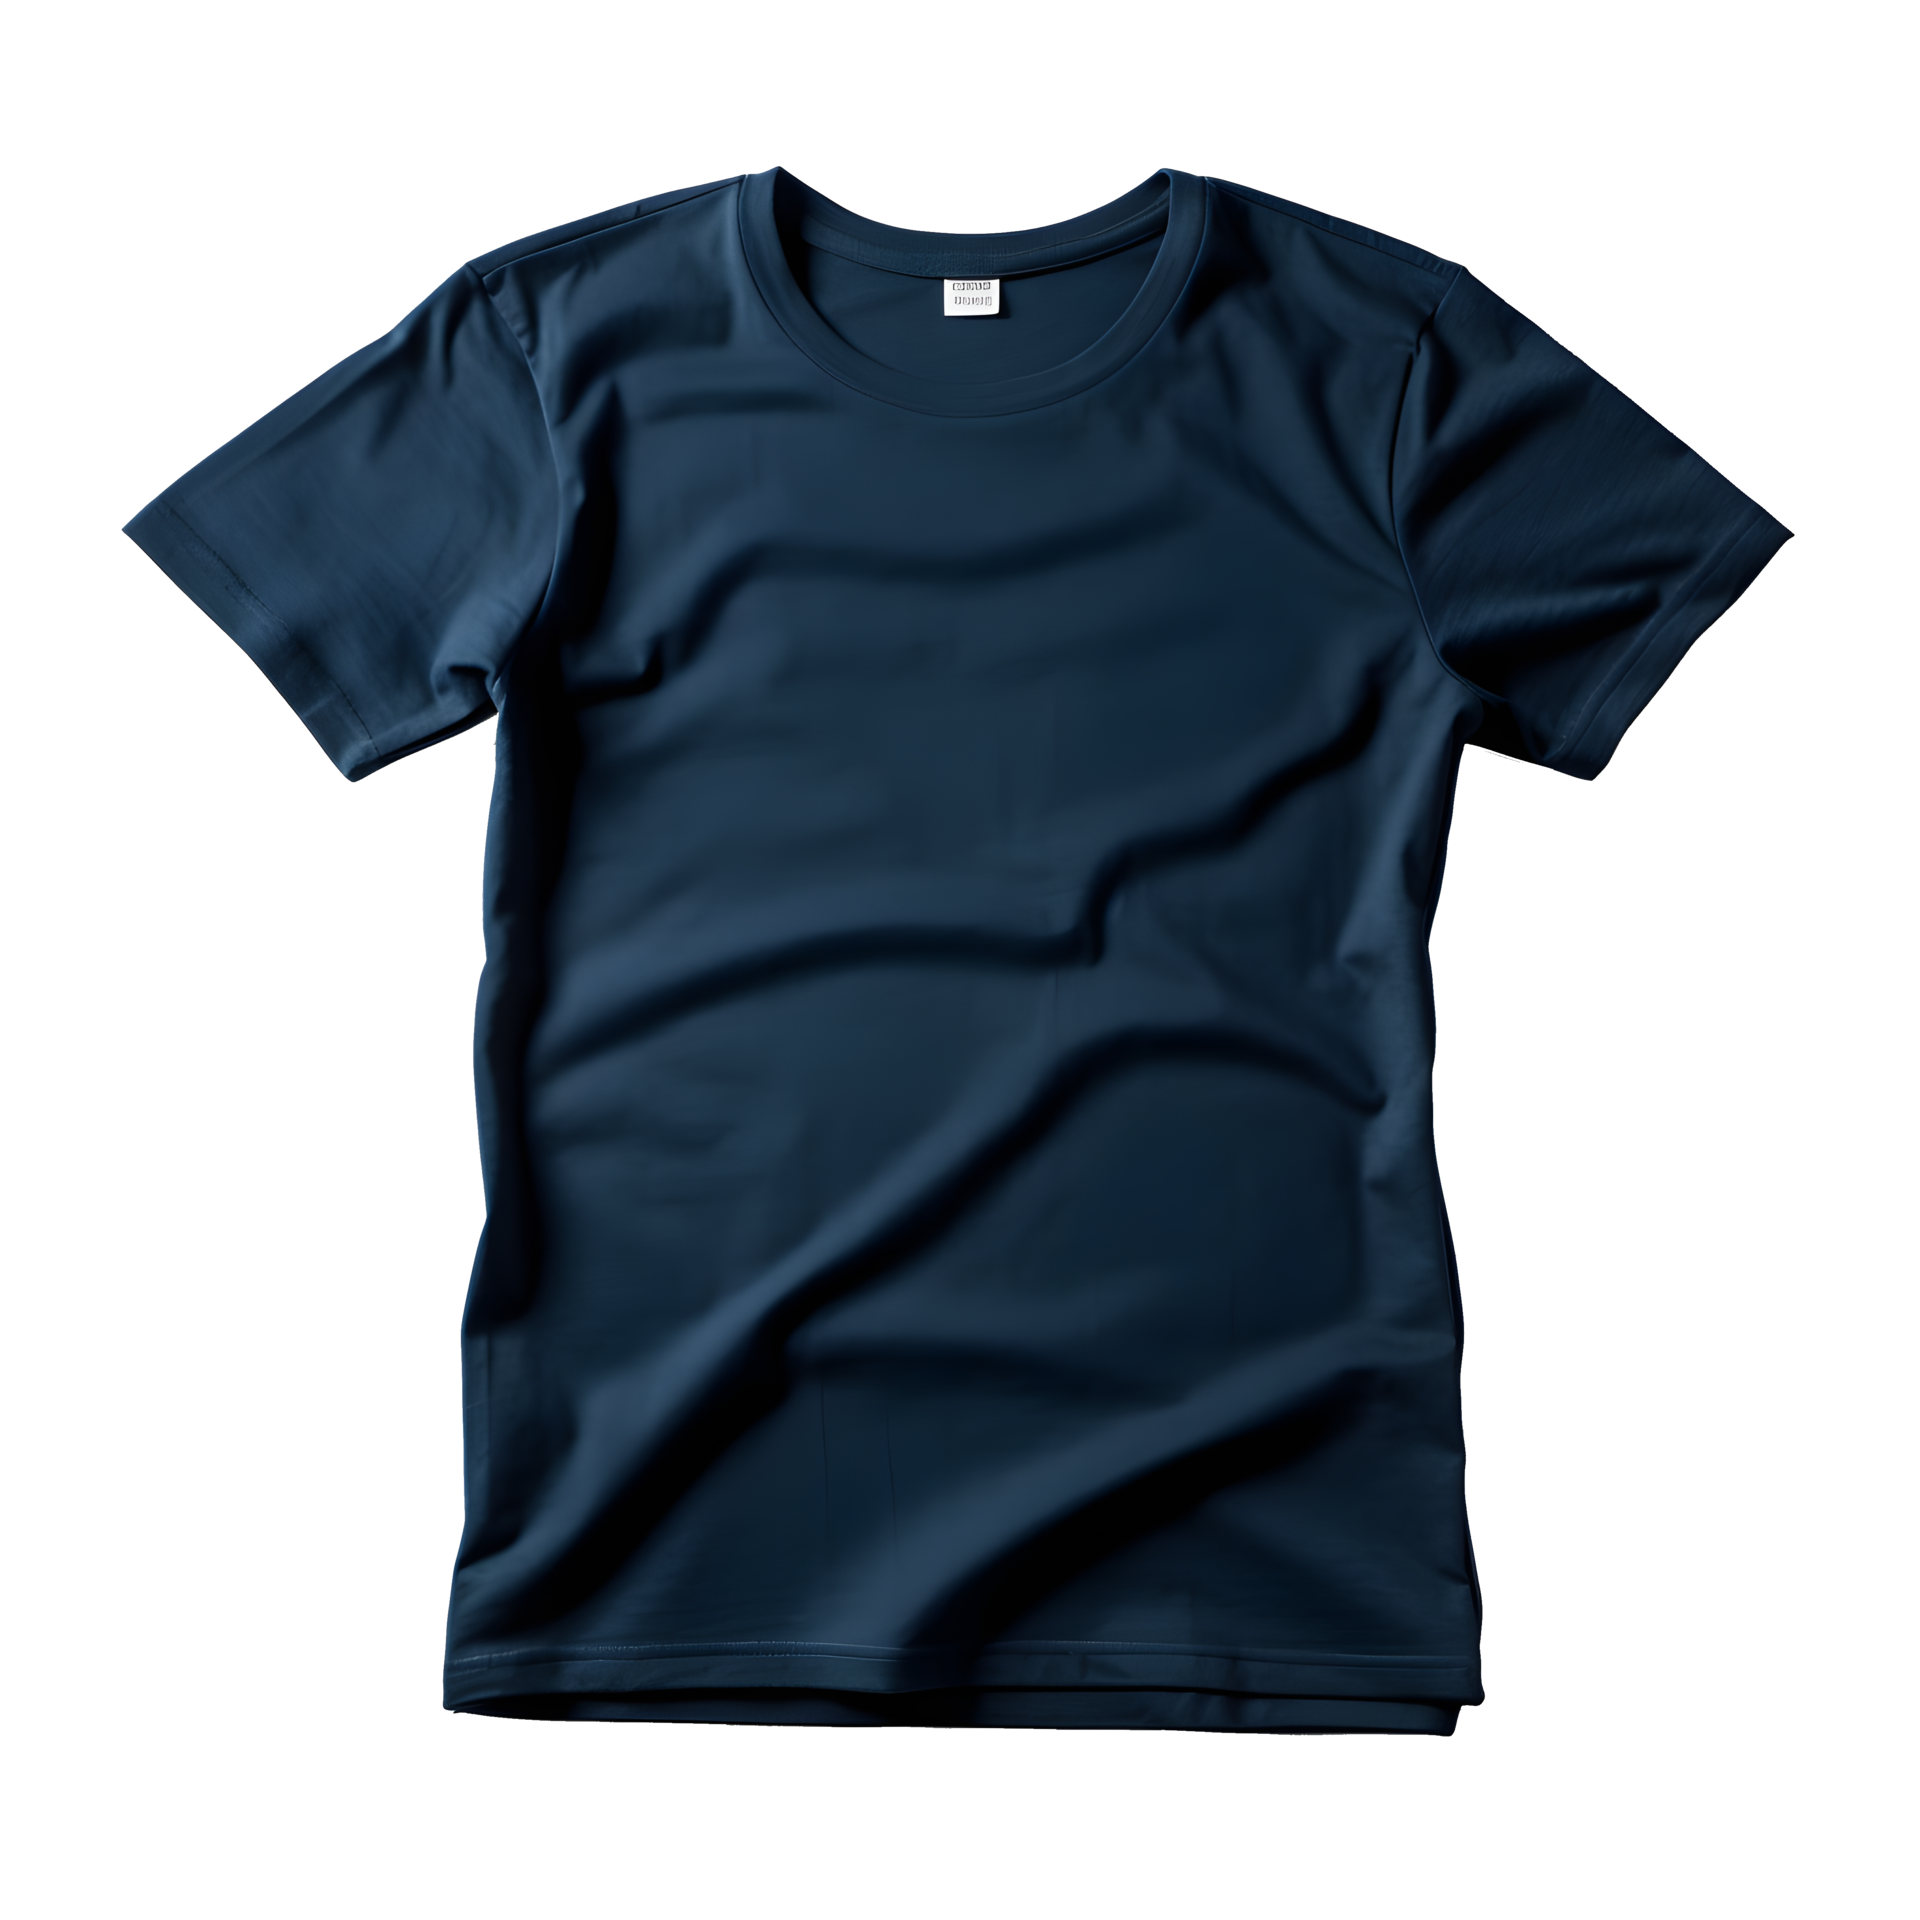 navy blue tshirt on transparent background 23334410 PNG